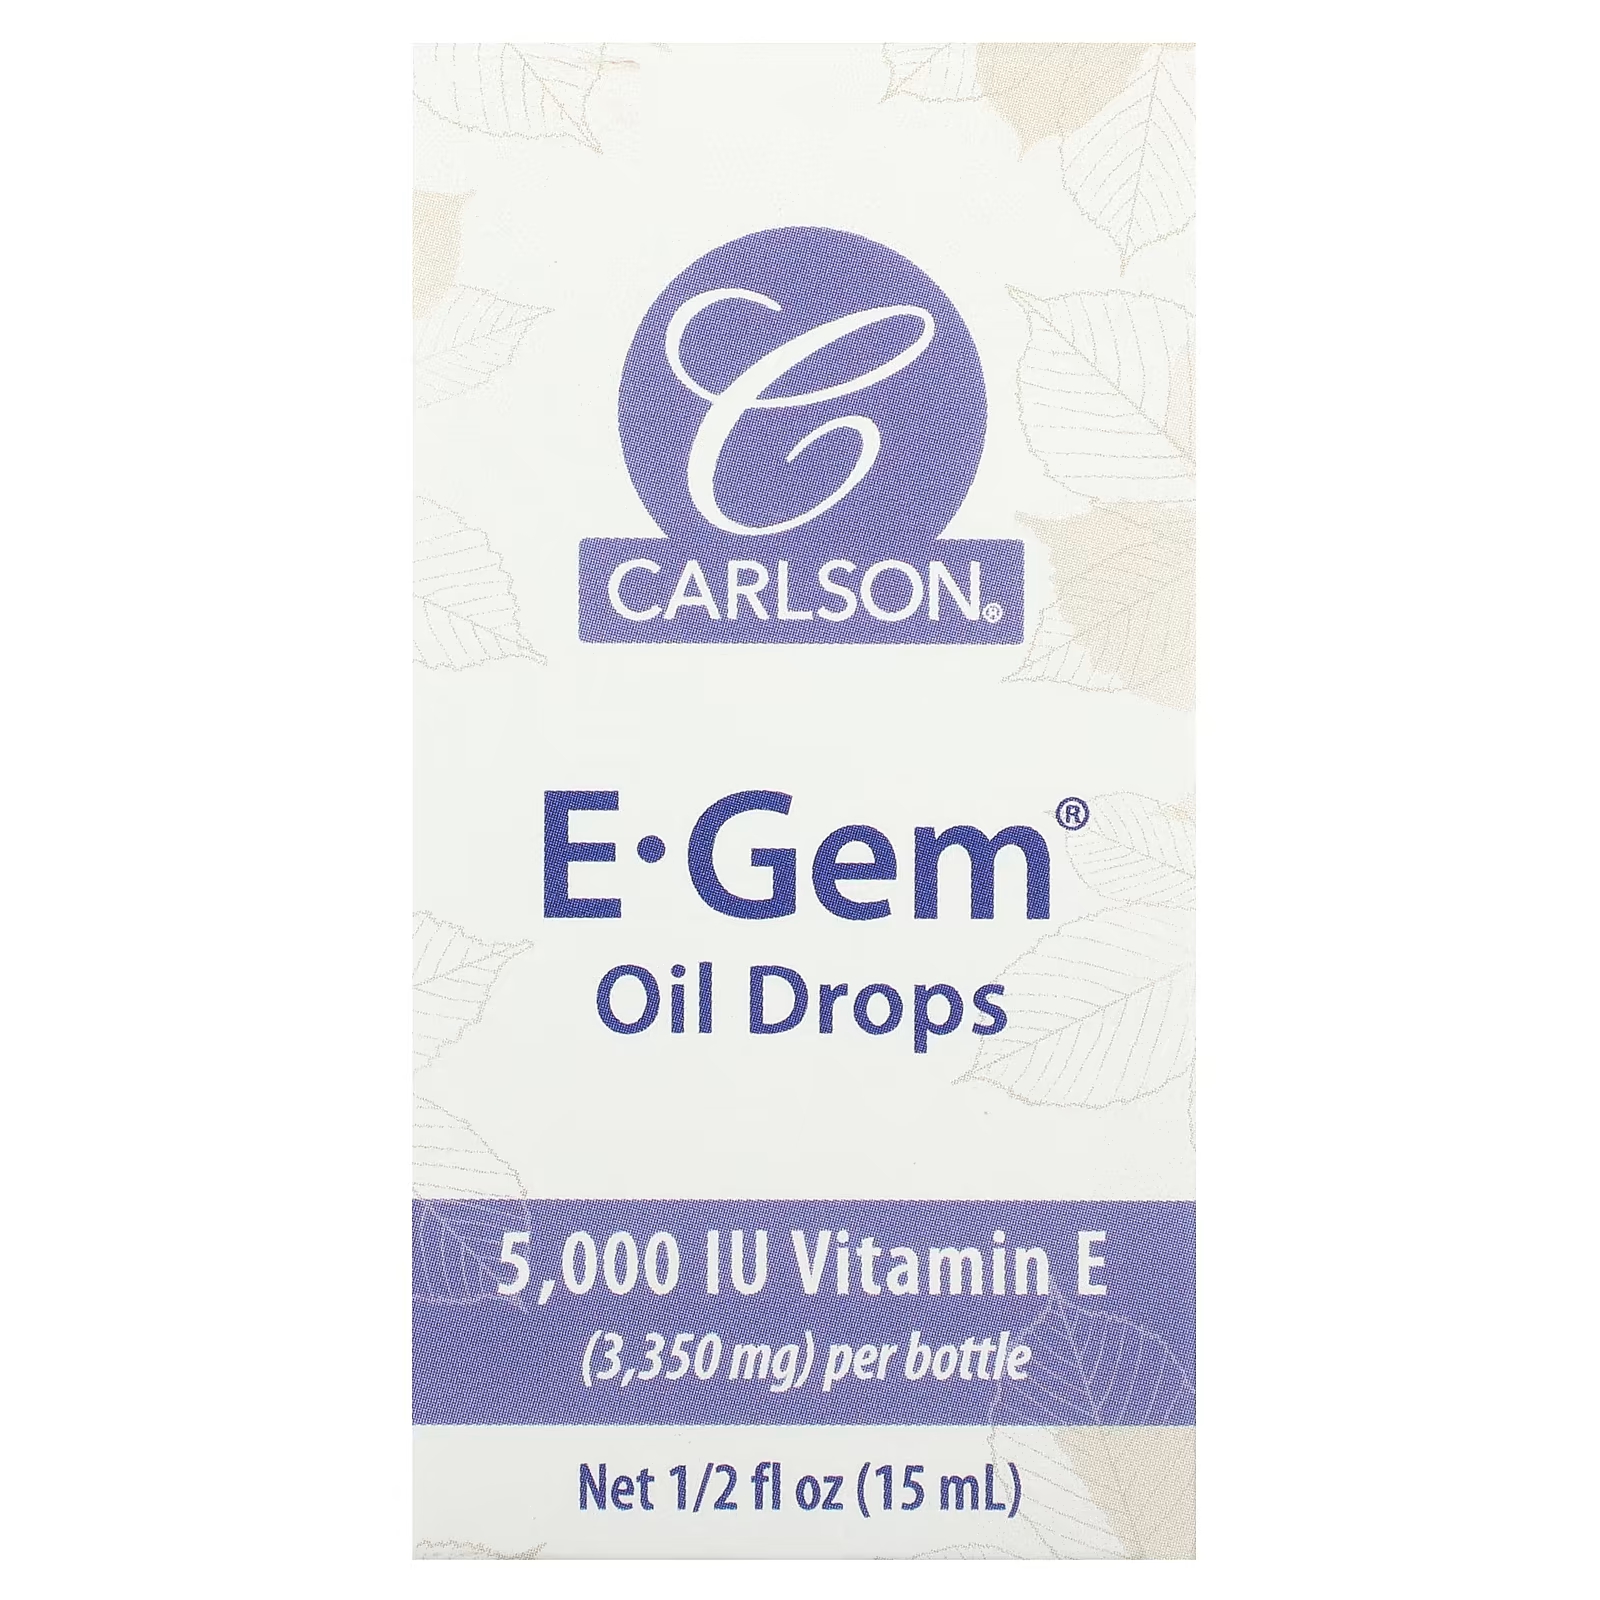 Carlson E-Gem Oil Drops 1/2 жидкой унции (15 мл) цена и фото